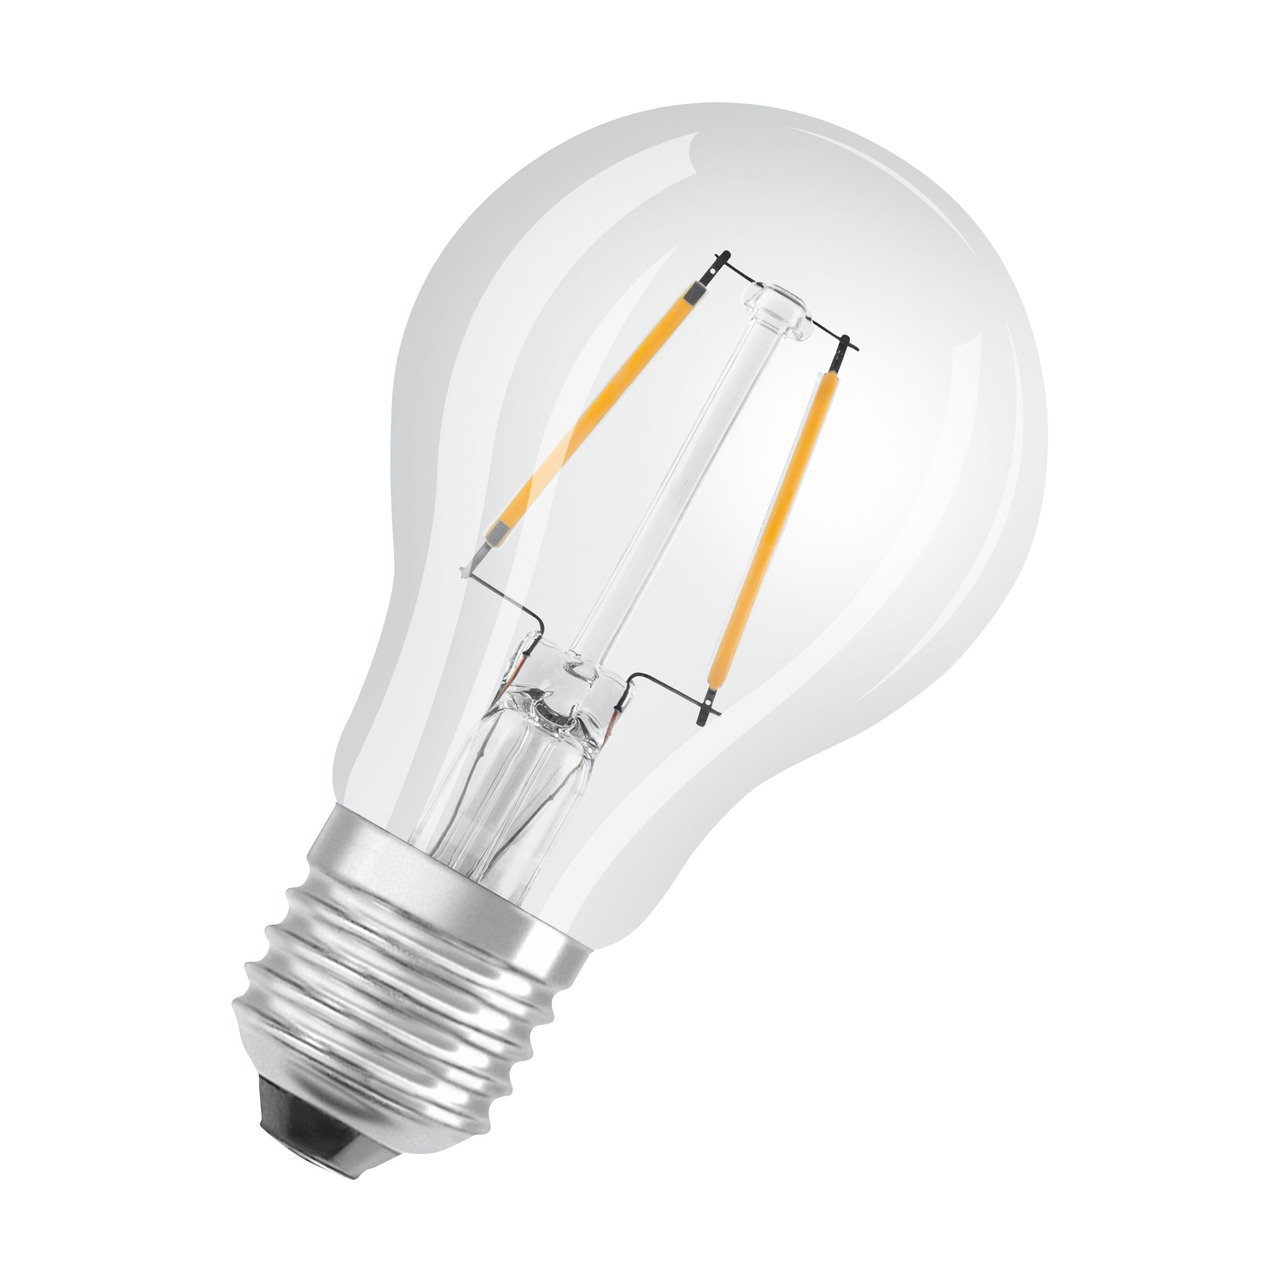 OSRAM 2-2-W-LED-Lampe A60- E27- 250 lm- warmweiss- klar- dimmbar